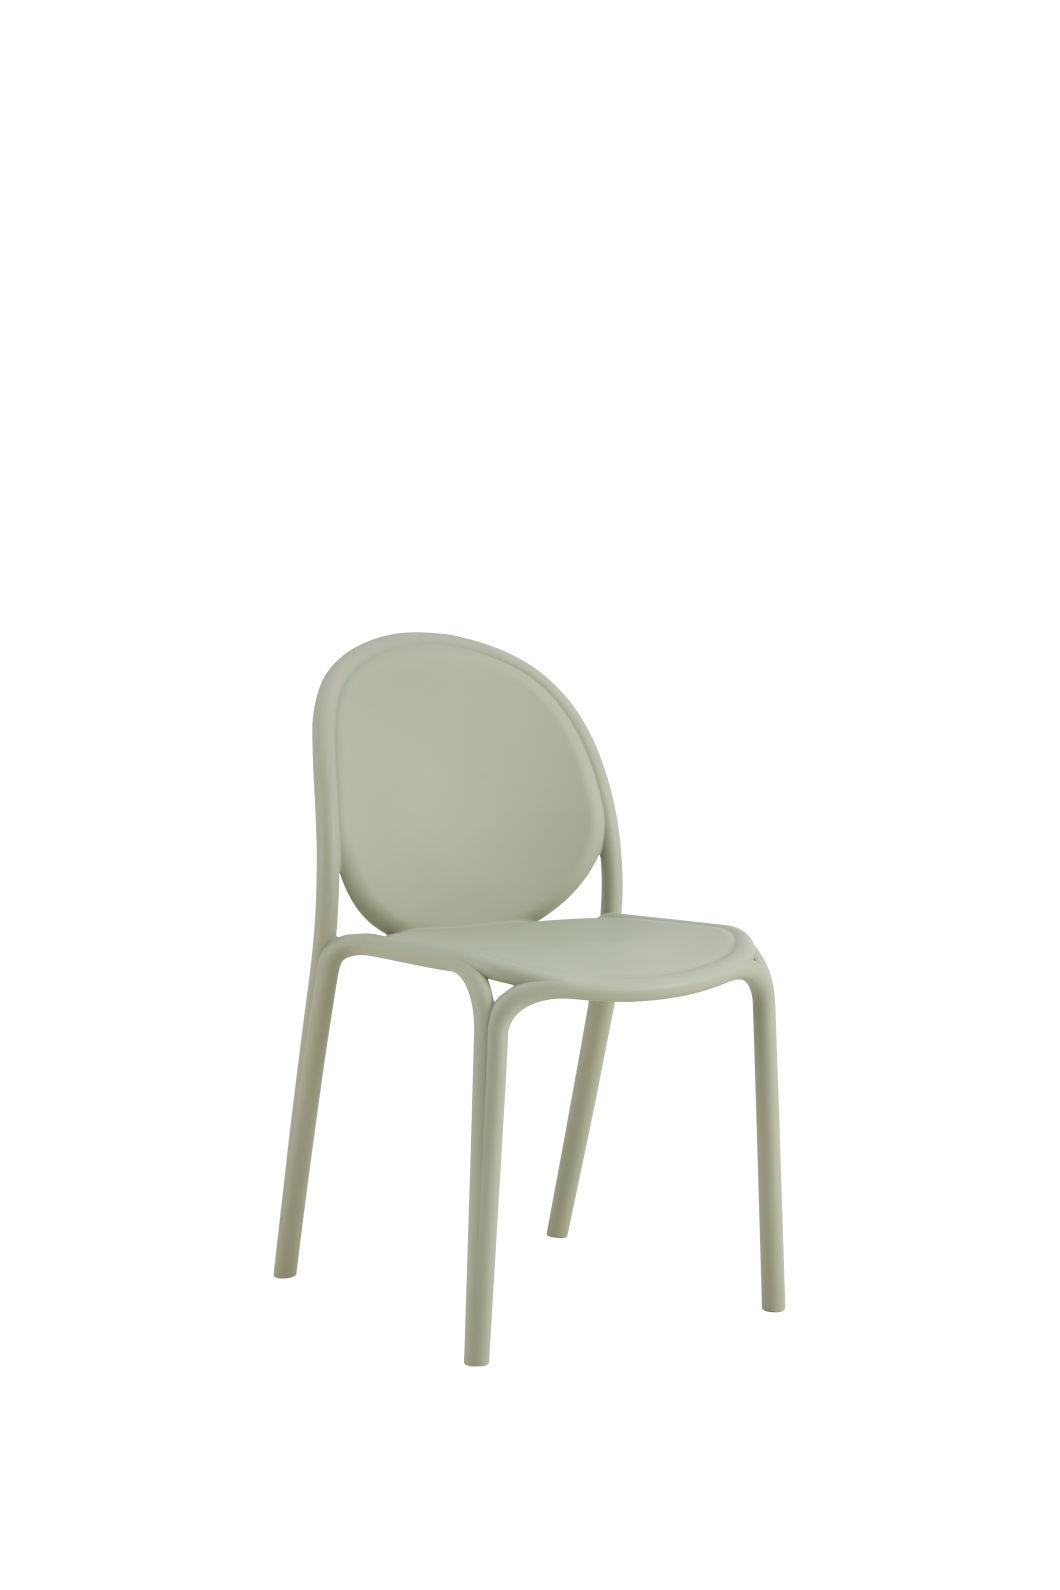 Wholesale Interior Furniture Cafe Bar Furniture PP Plastic Restaurant Chairs